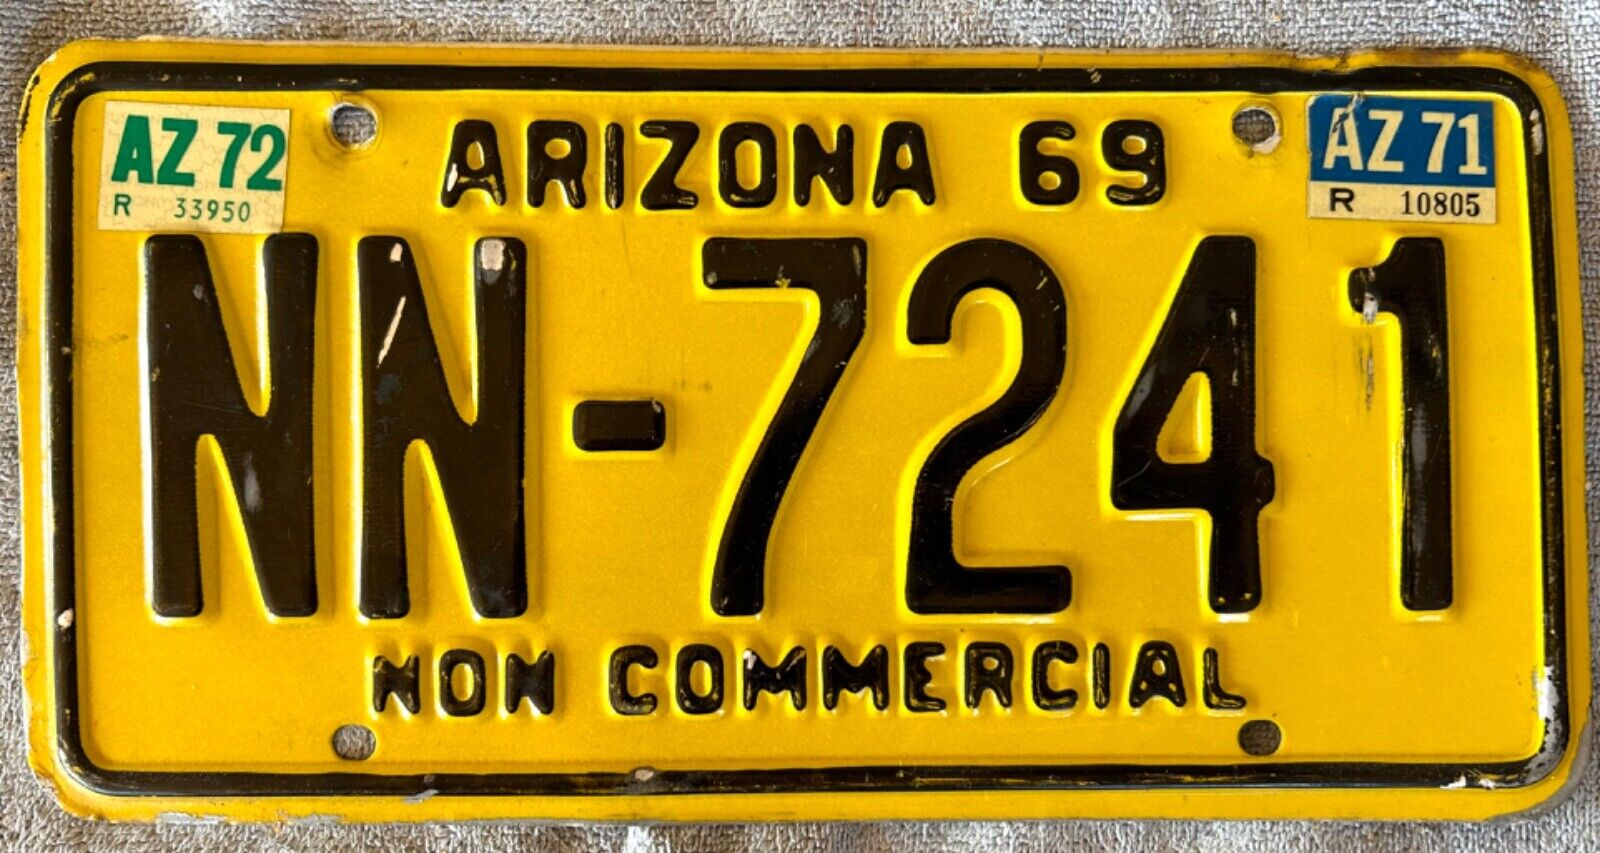 MVD clear 1969 Arizona pickup truck license plate (1) 69 70 71 72 1970 1971 1972